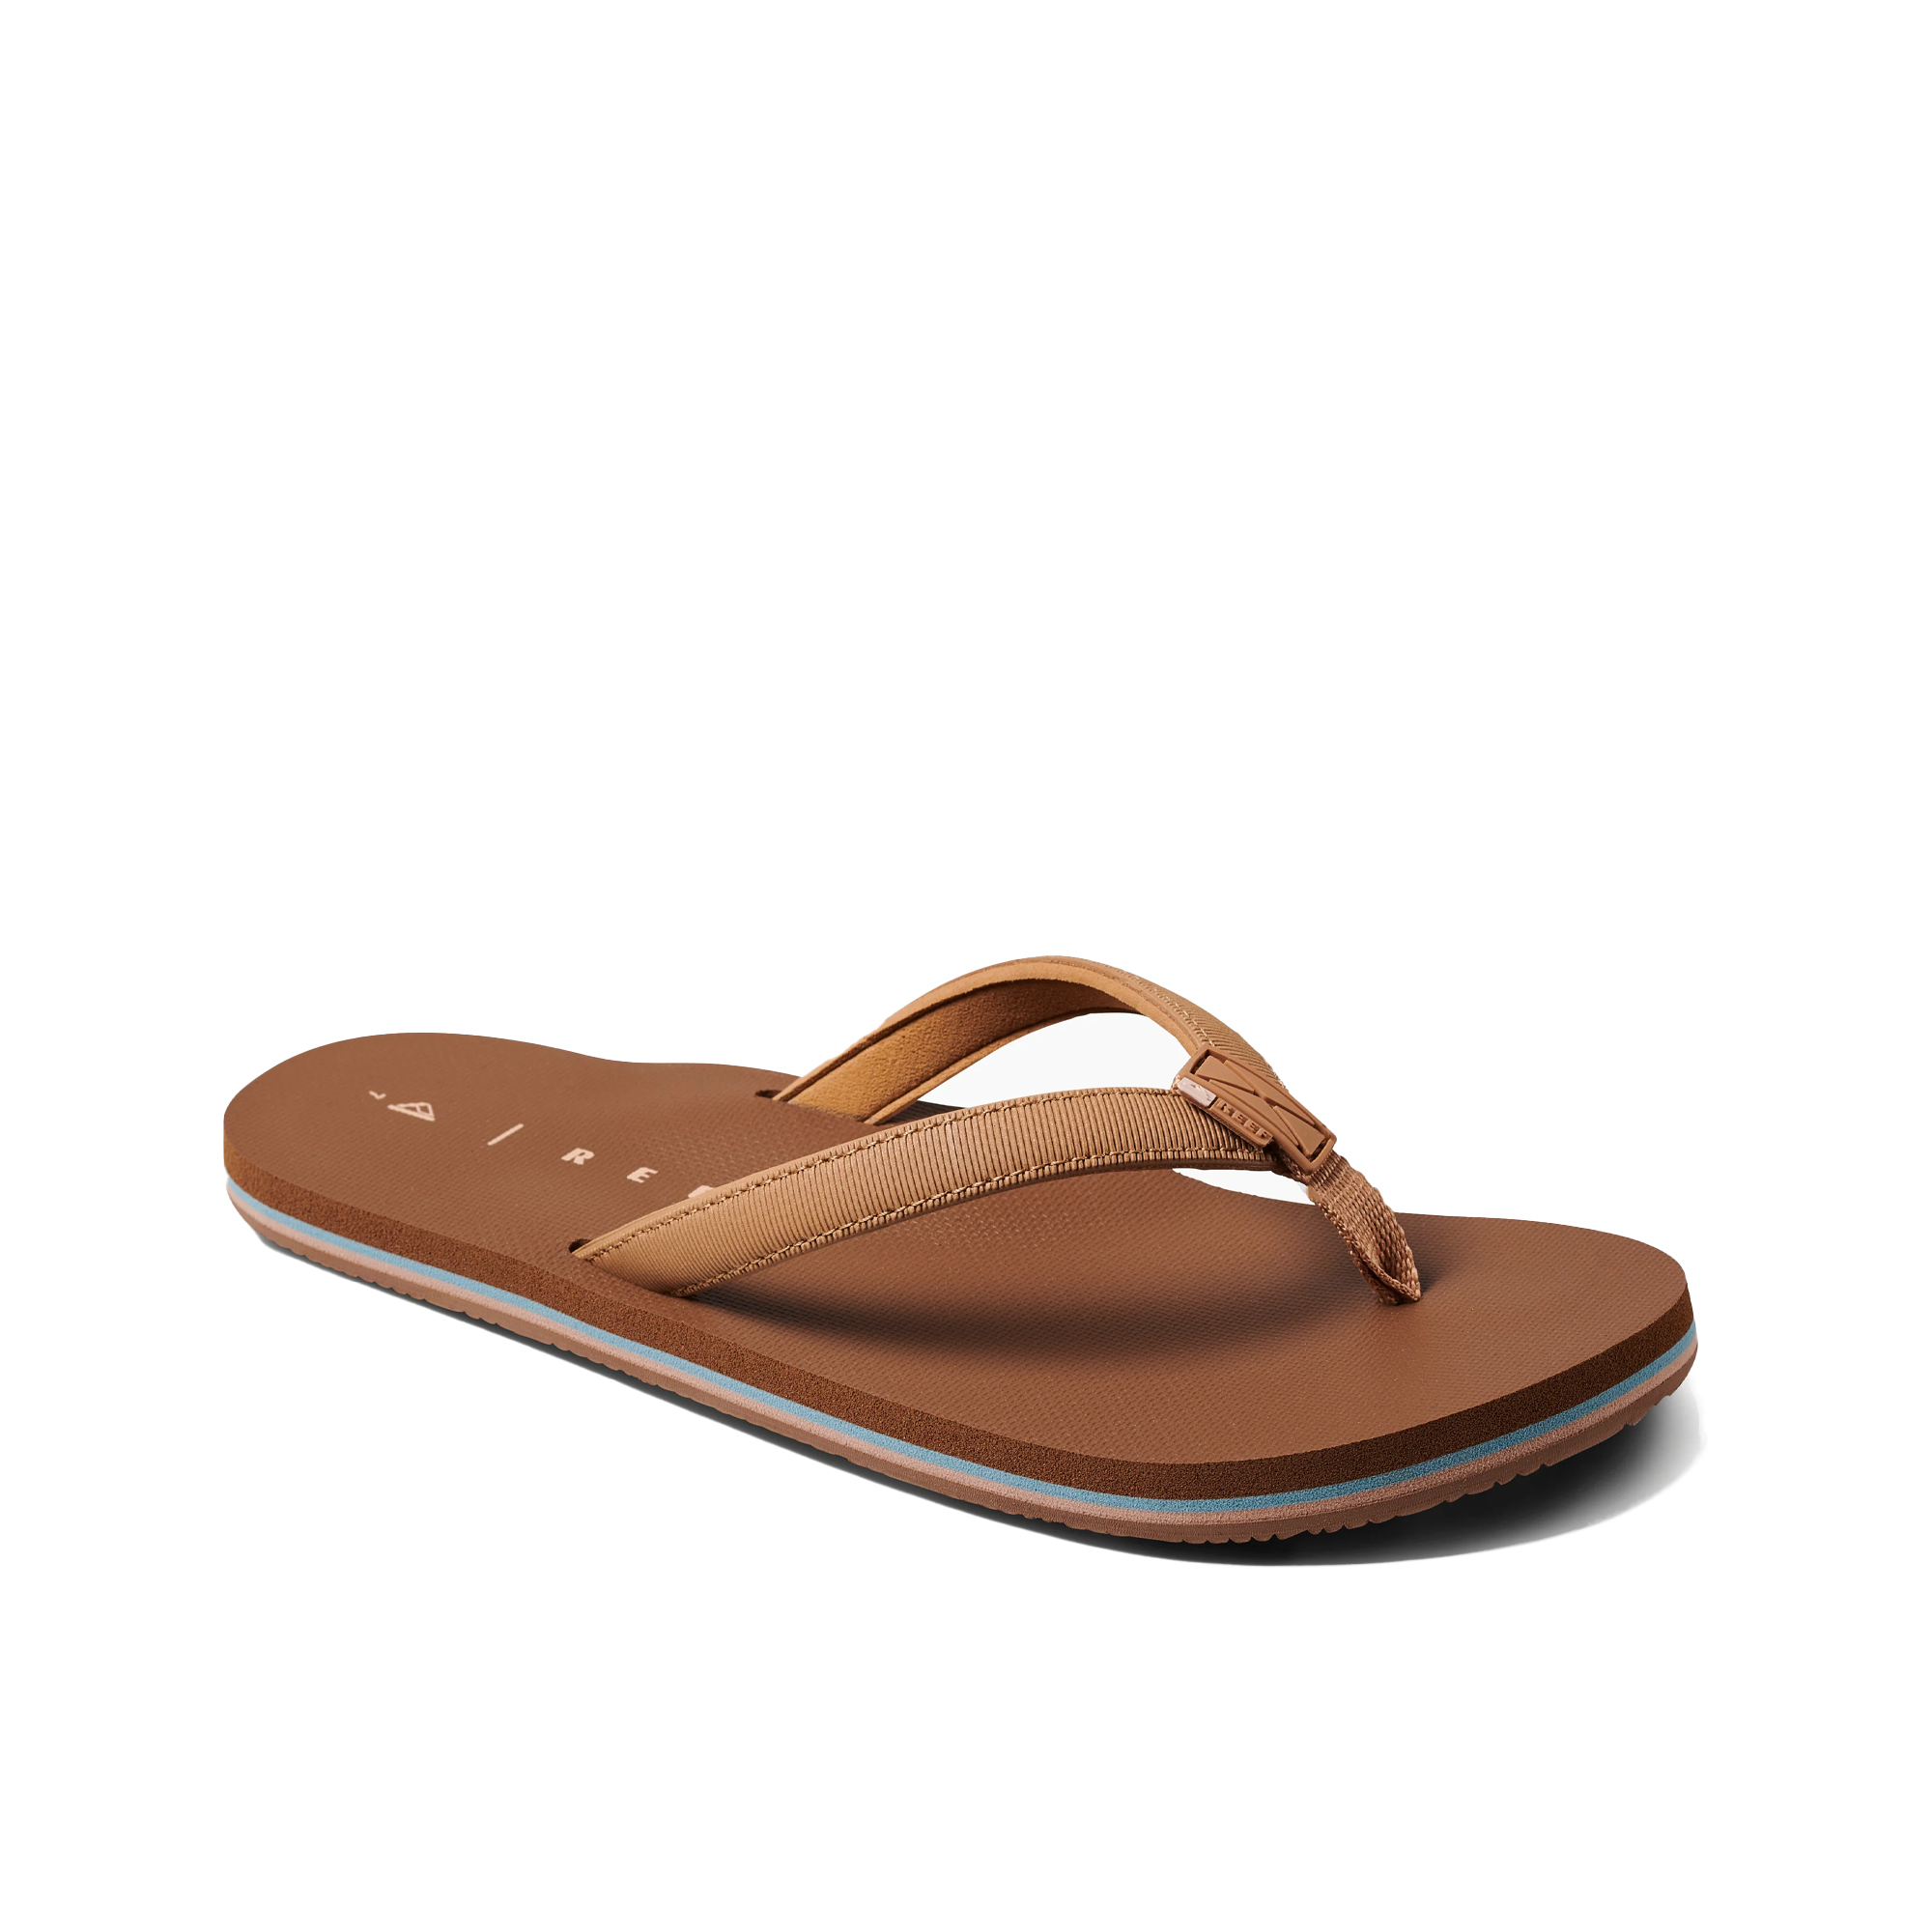 Comfortable beach sandal - Brown